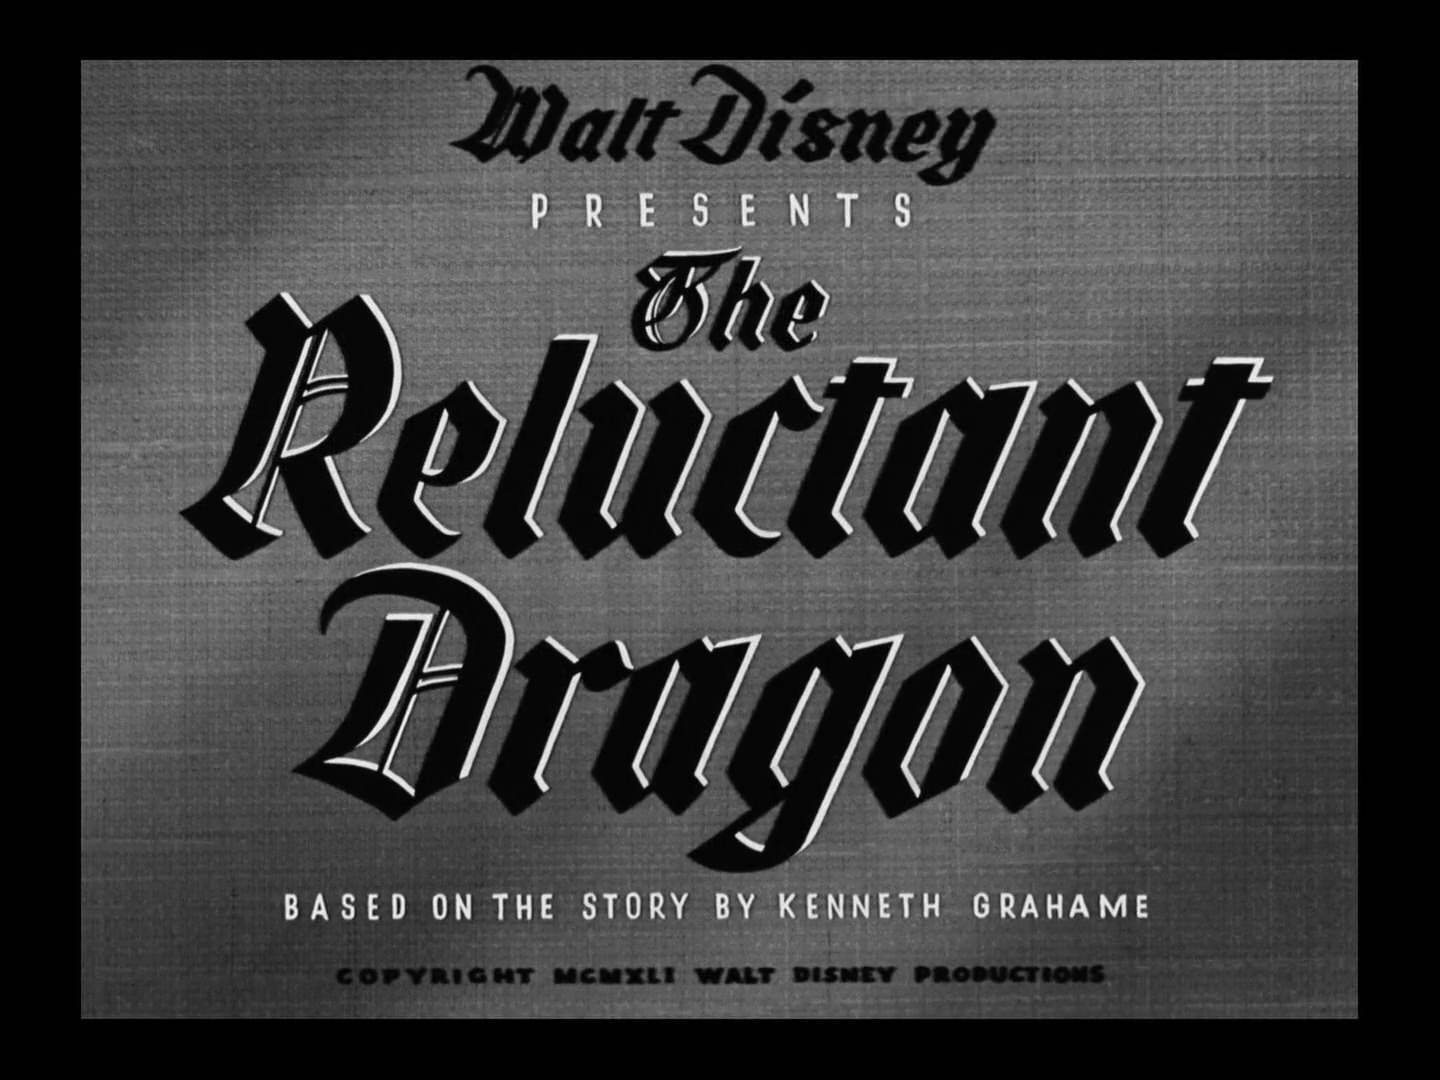 1941 Walt Disney Presents Logo - Image - Reluctant-dragon-disneyscreencaps.com-1.jpg | Logopedia ...